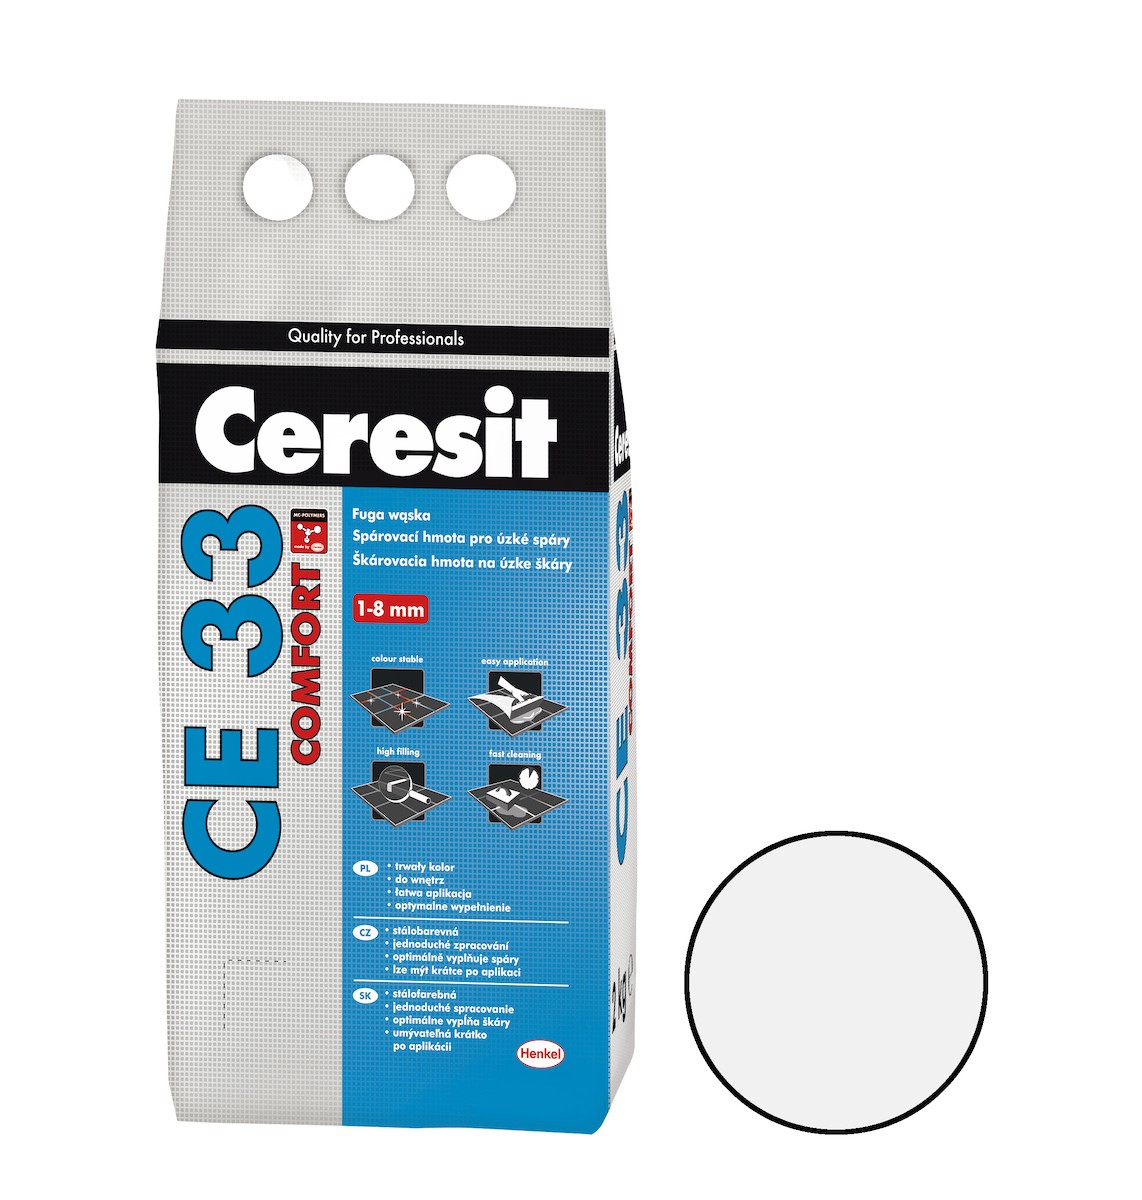 Spárovací hmota Ceresit CE 33 bílá 2 kg CG2A CE33201 Ceresit